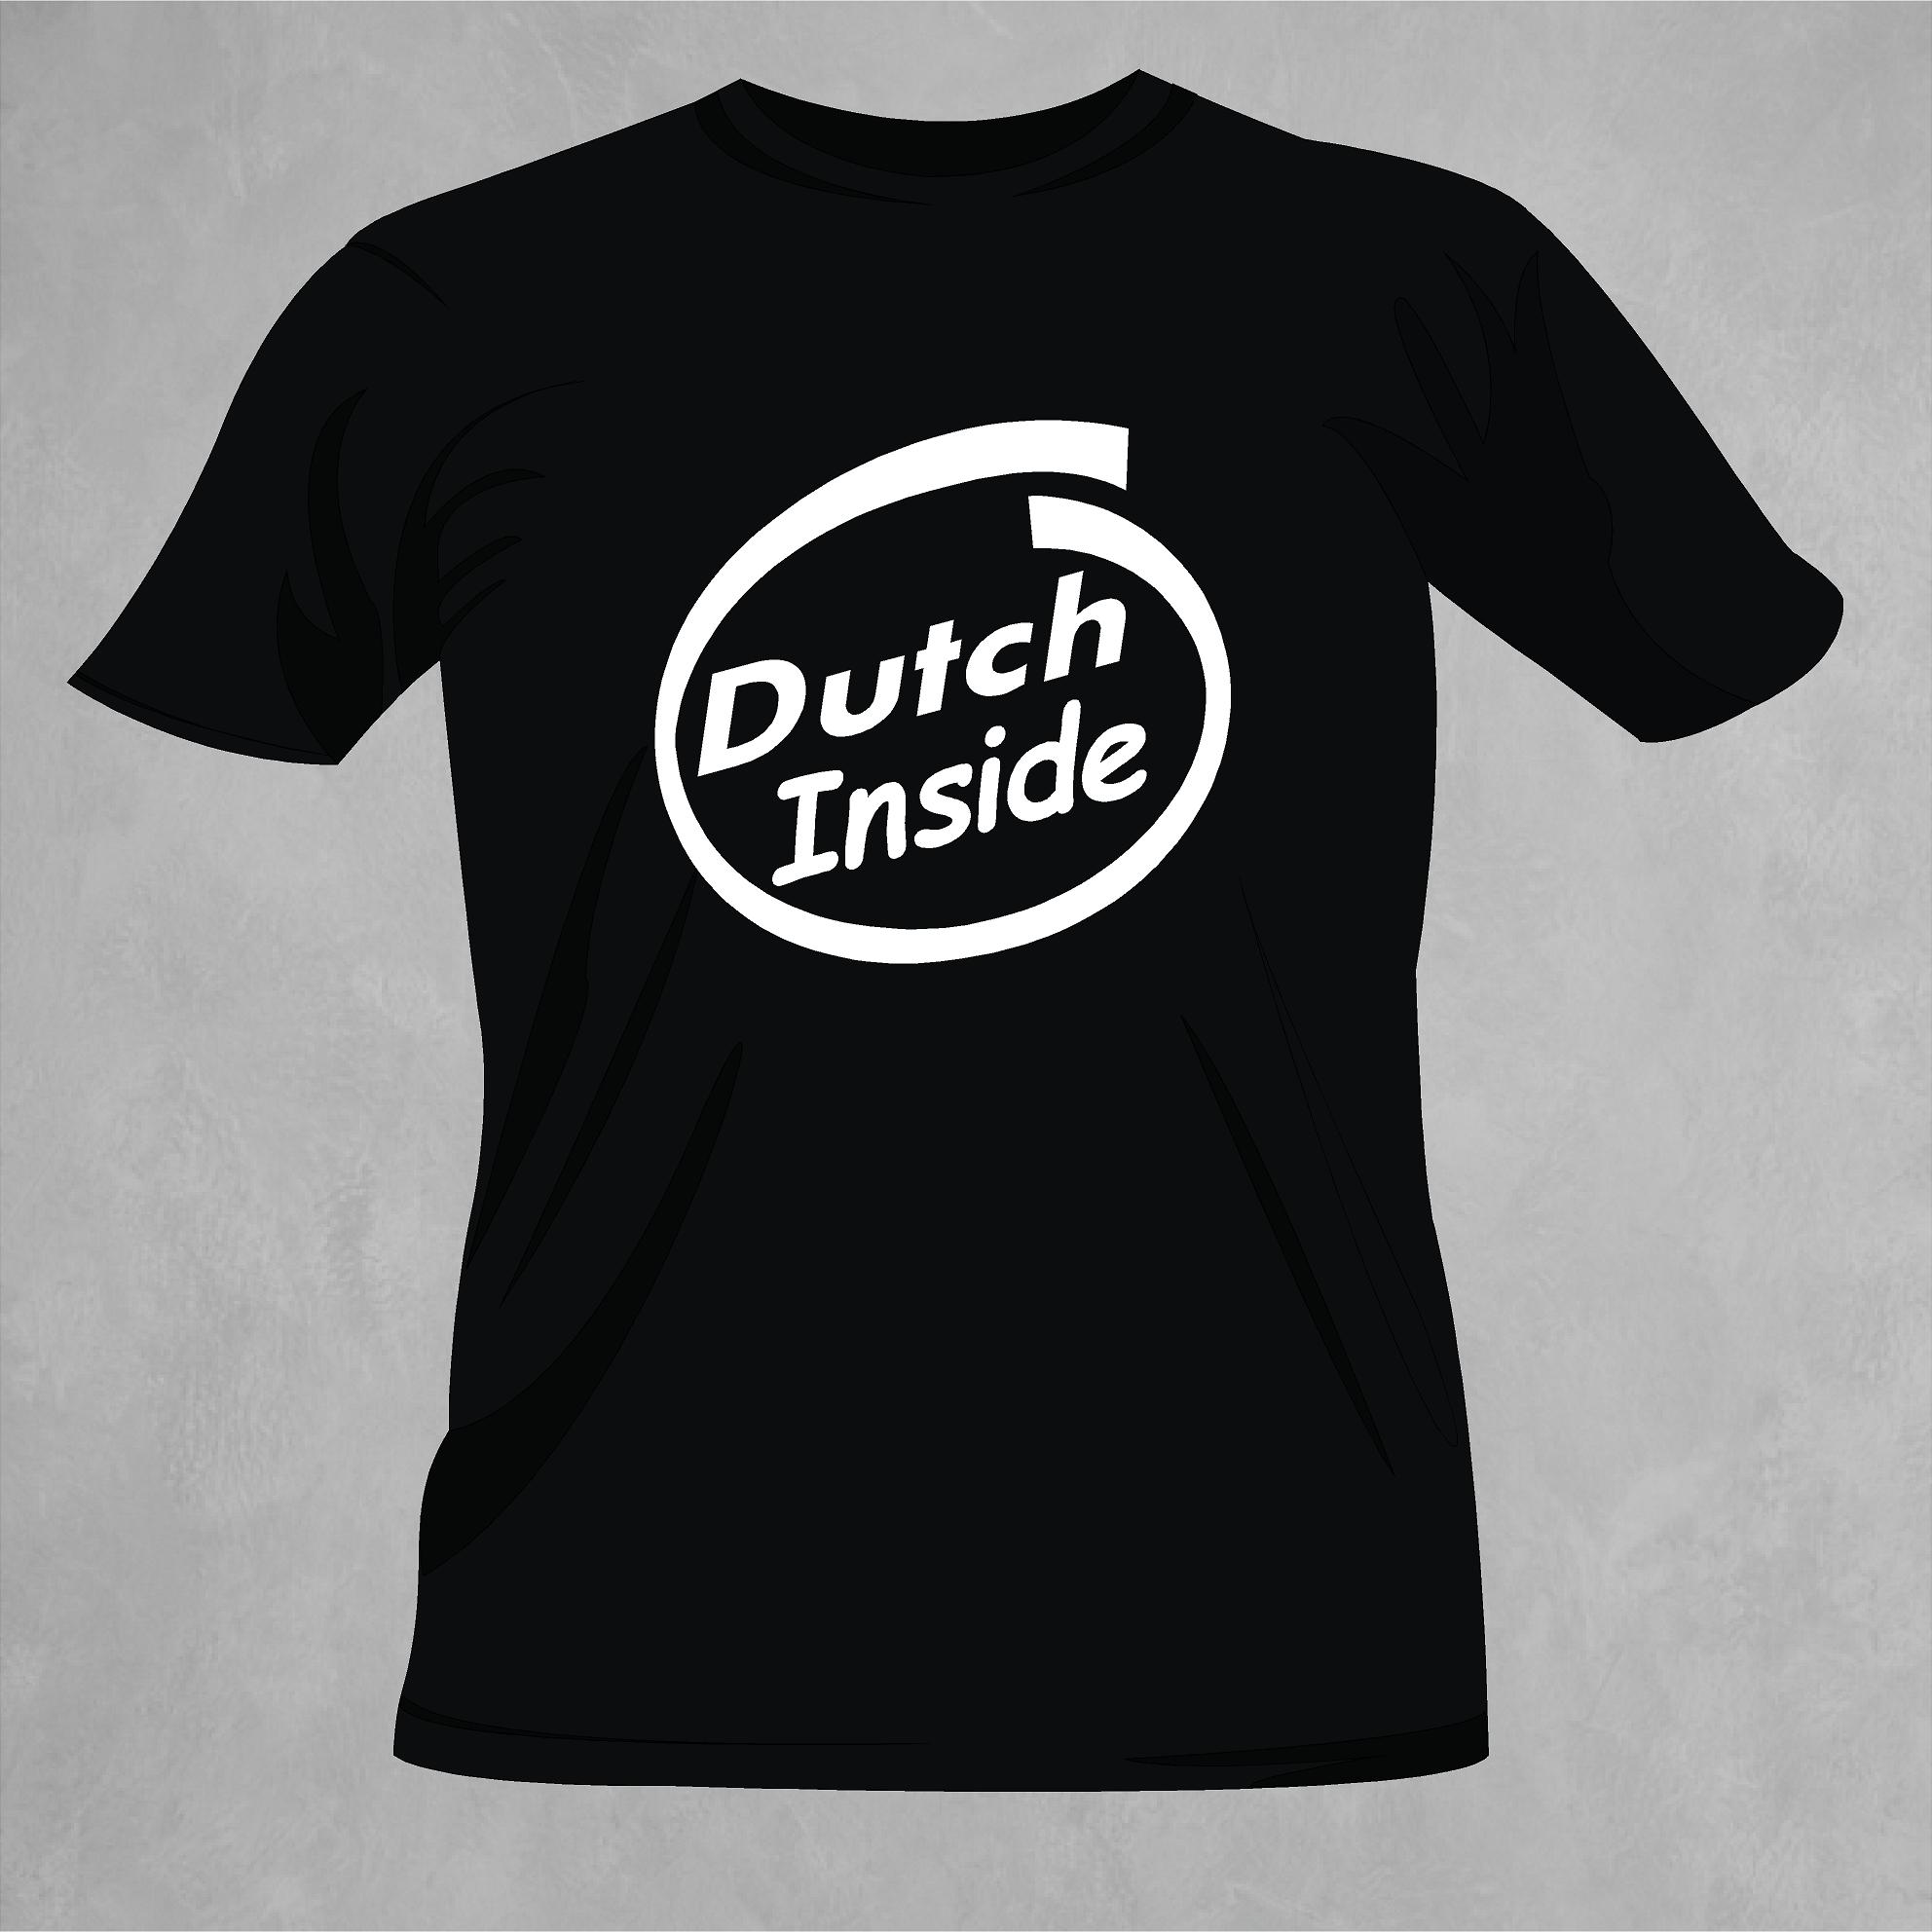 Dutch Inside